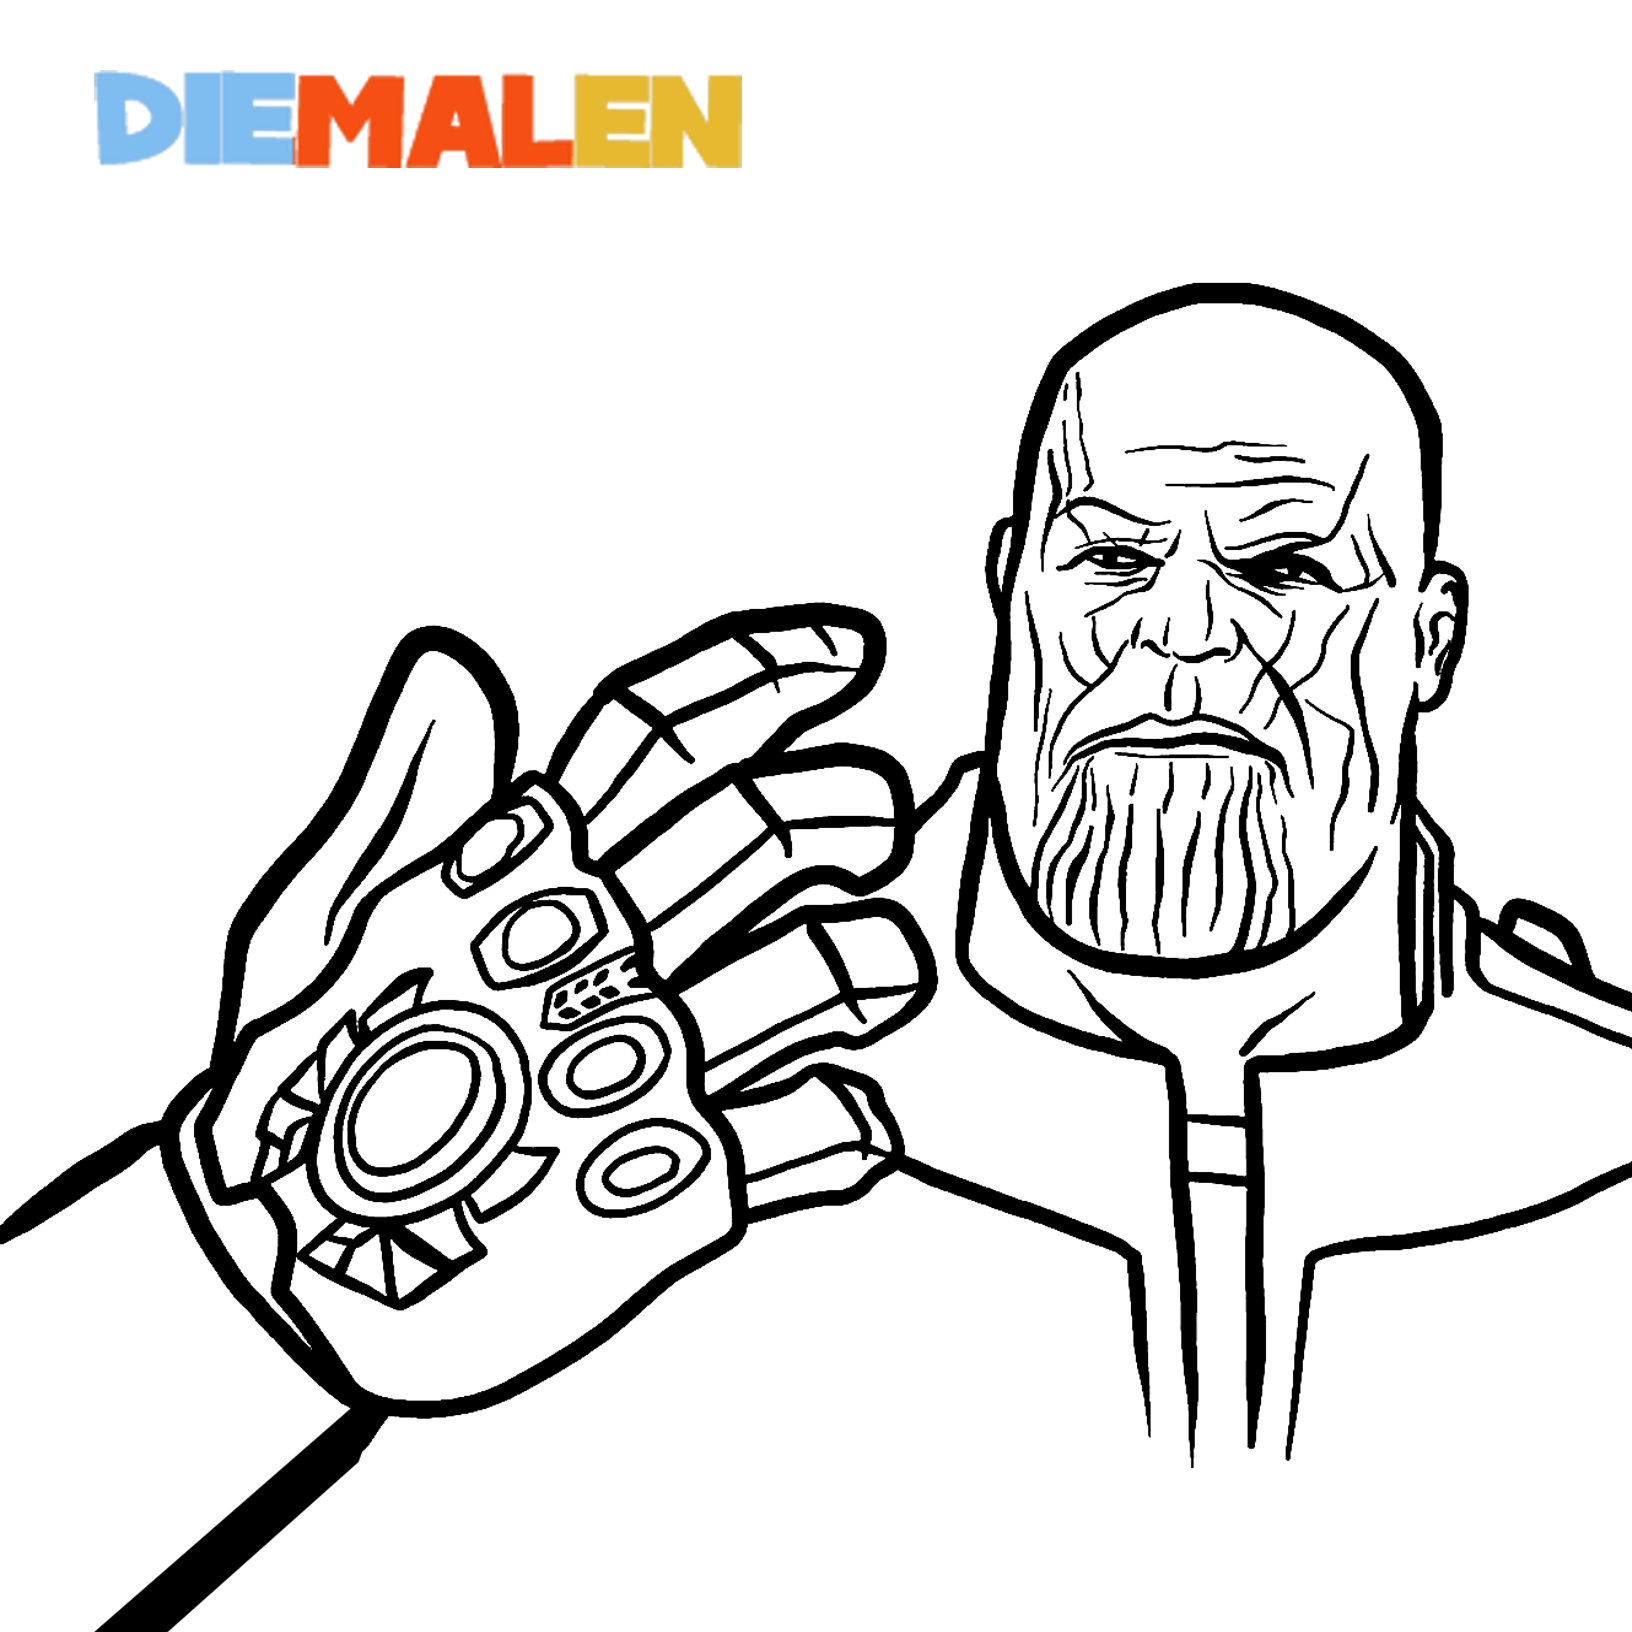 Thanos Ausmalbilder – Schlechter Charakter → DieMalen.com